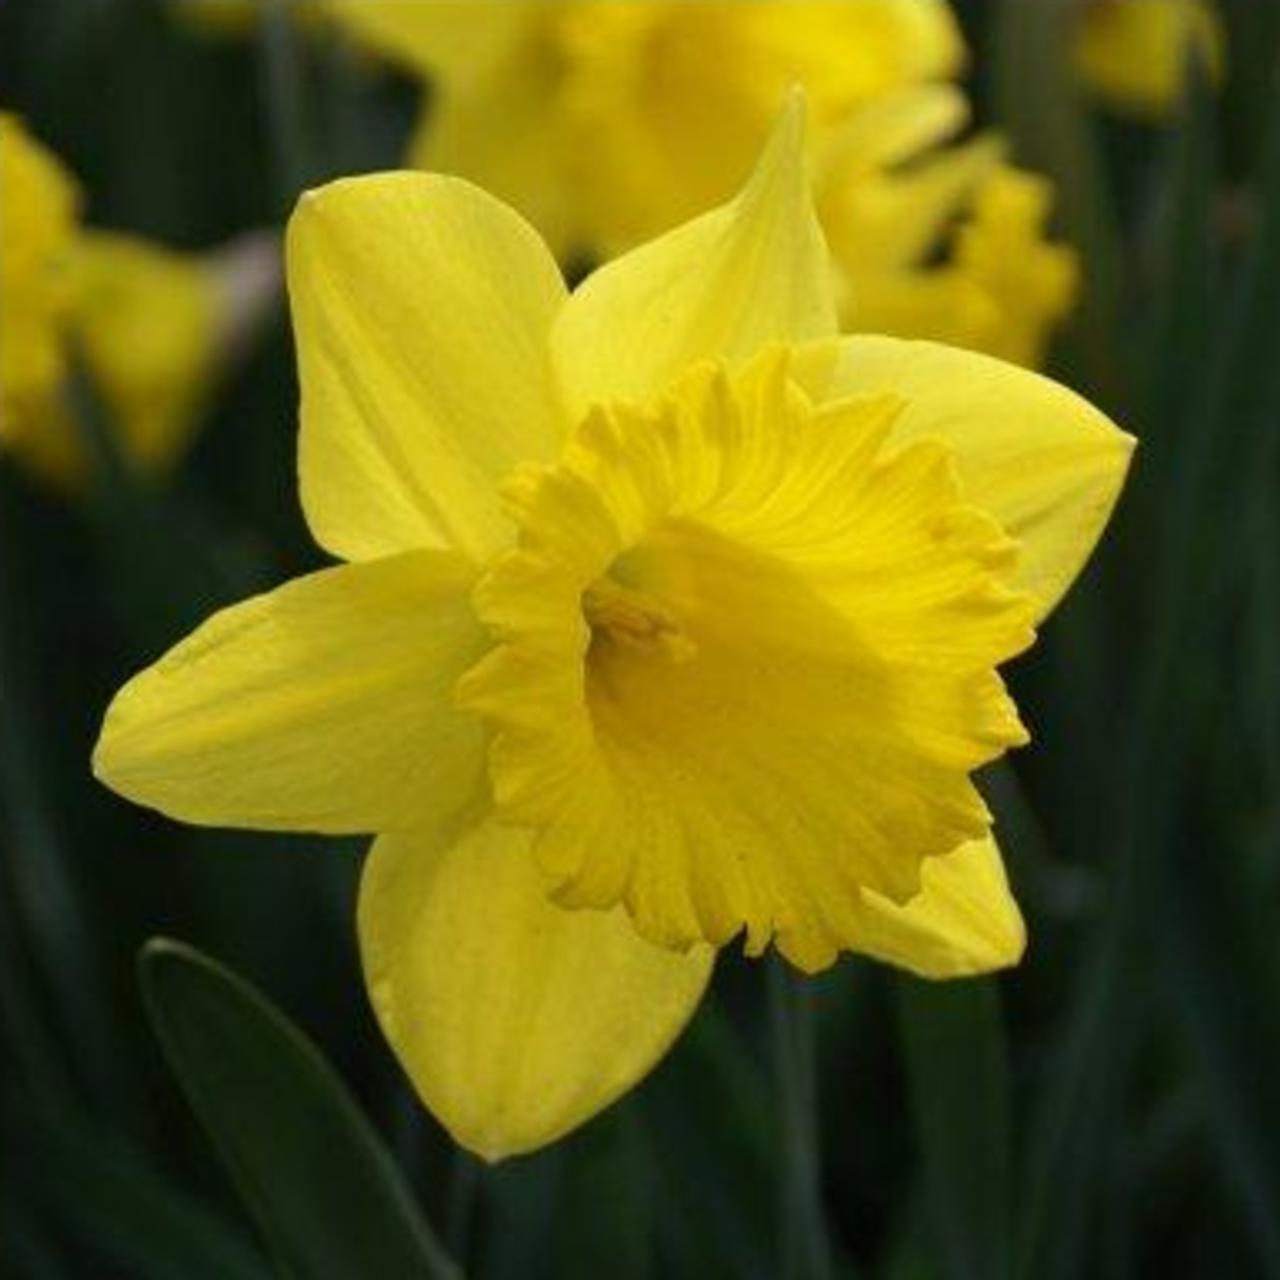 Narcissus 'Dutch Master' plant